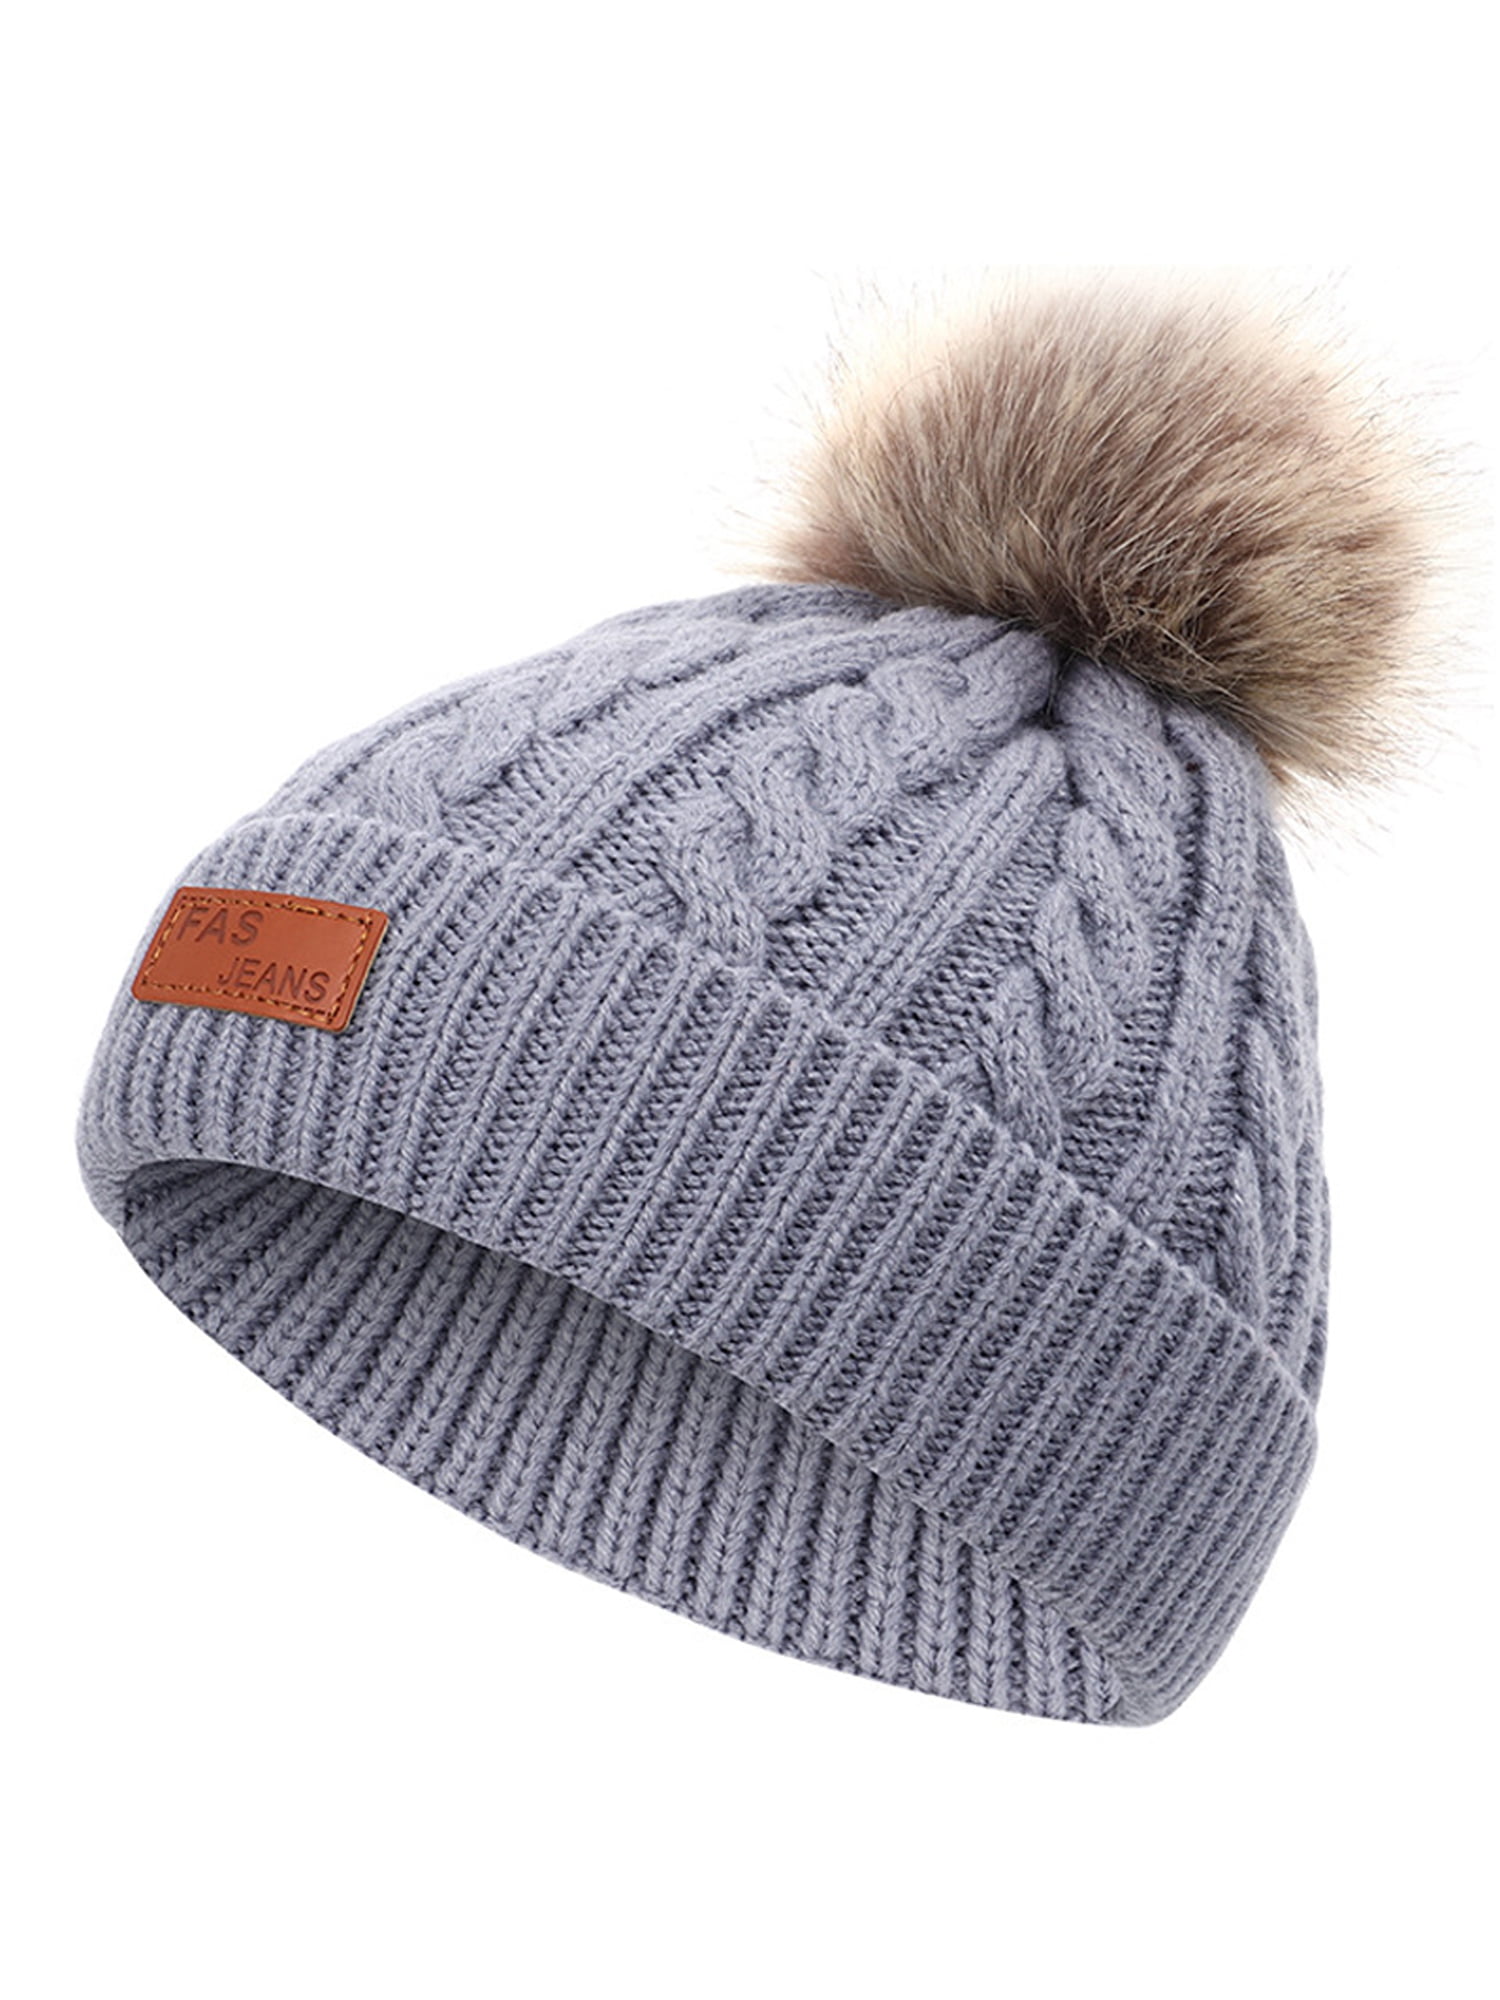 Unisex Baby Winter Warm Crochet Knitting Wool Fur Cap Beanie Pompom Ball Hat 